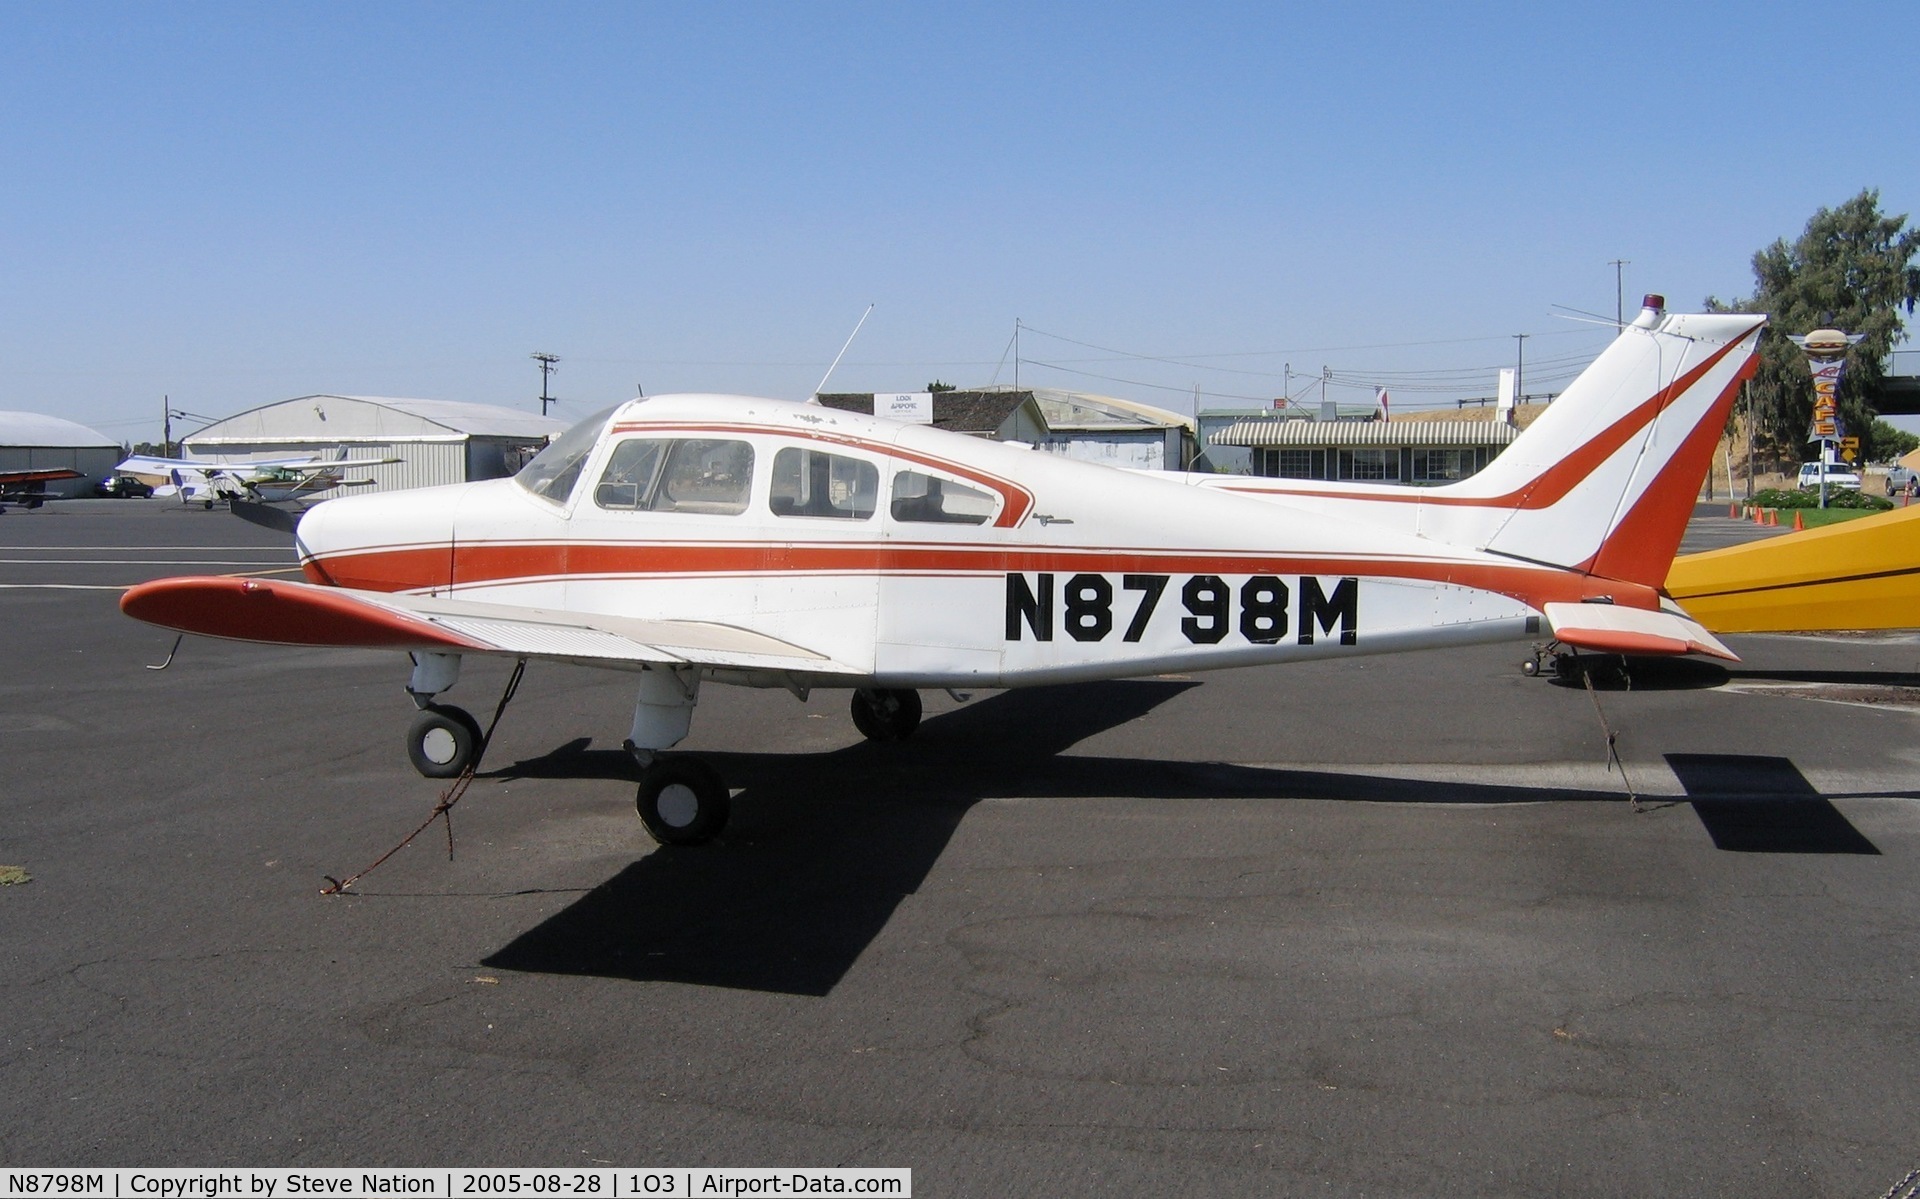 N8798M, 1964 Beech A23 C/N M-581, 1964 Beech A23 Muskateer @ Lodi Airport, CA